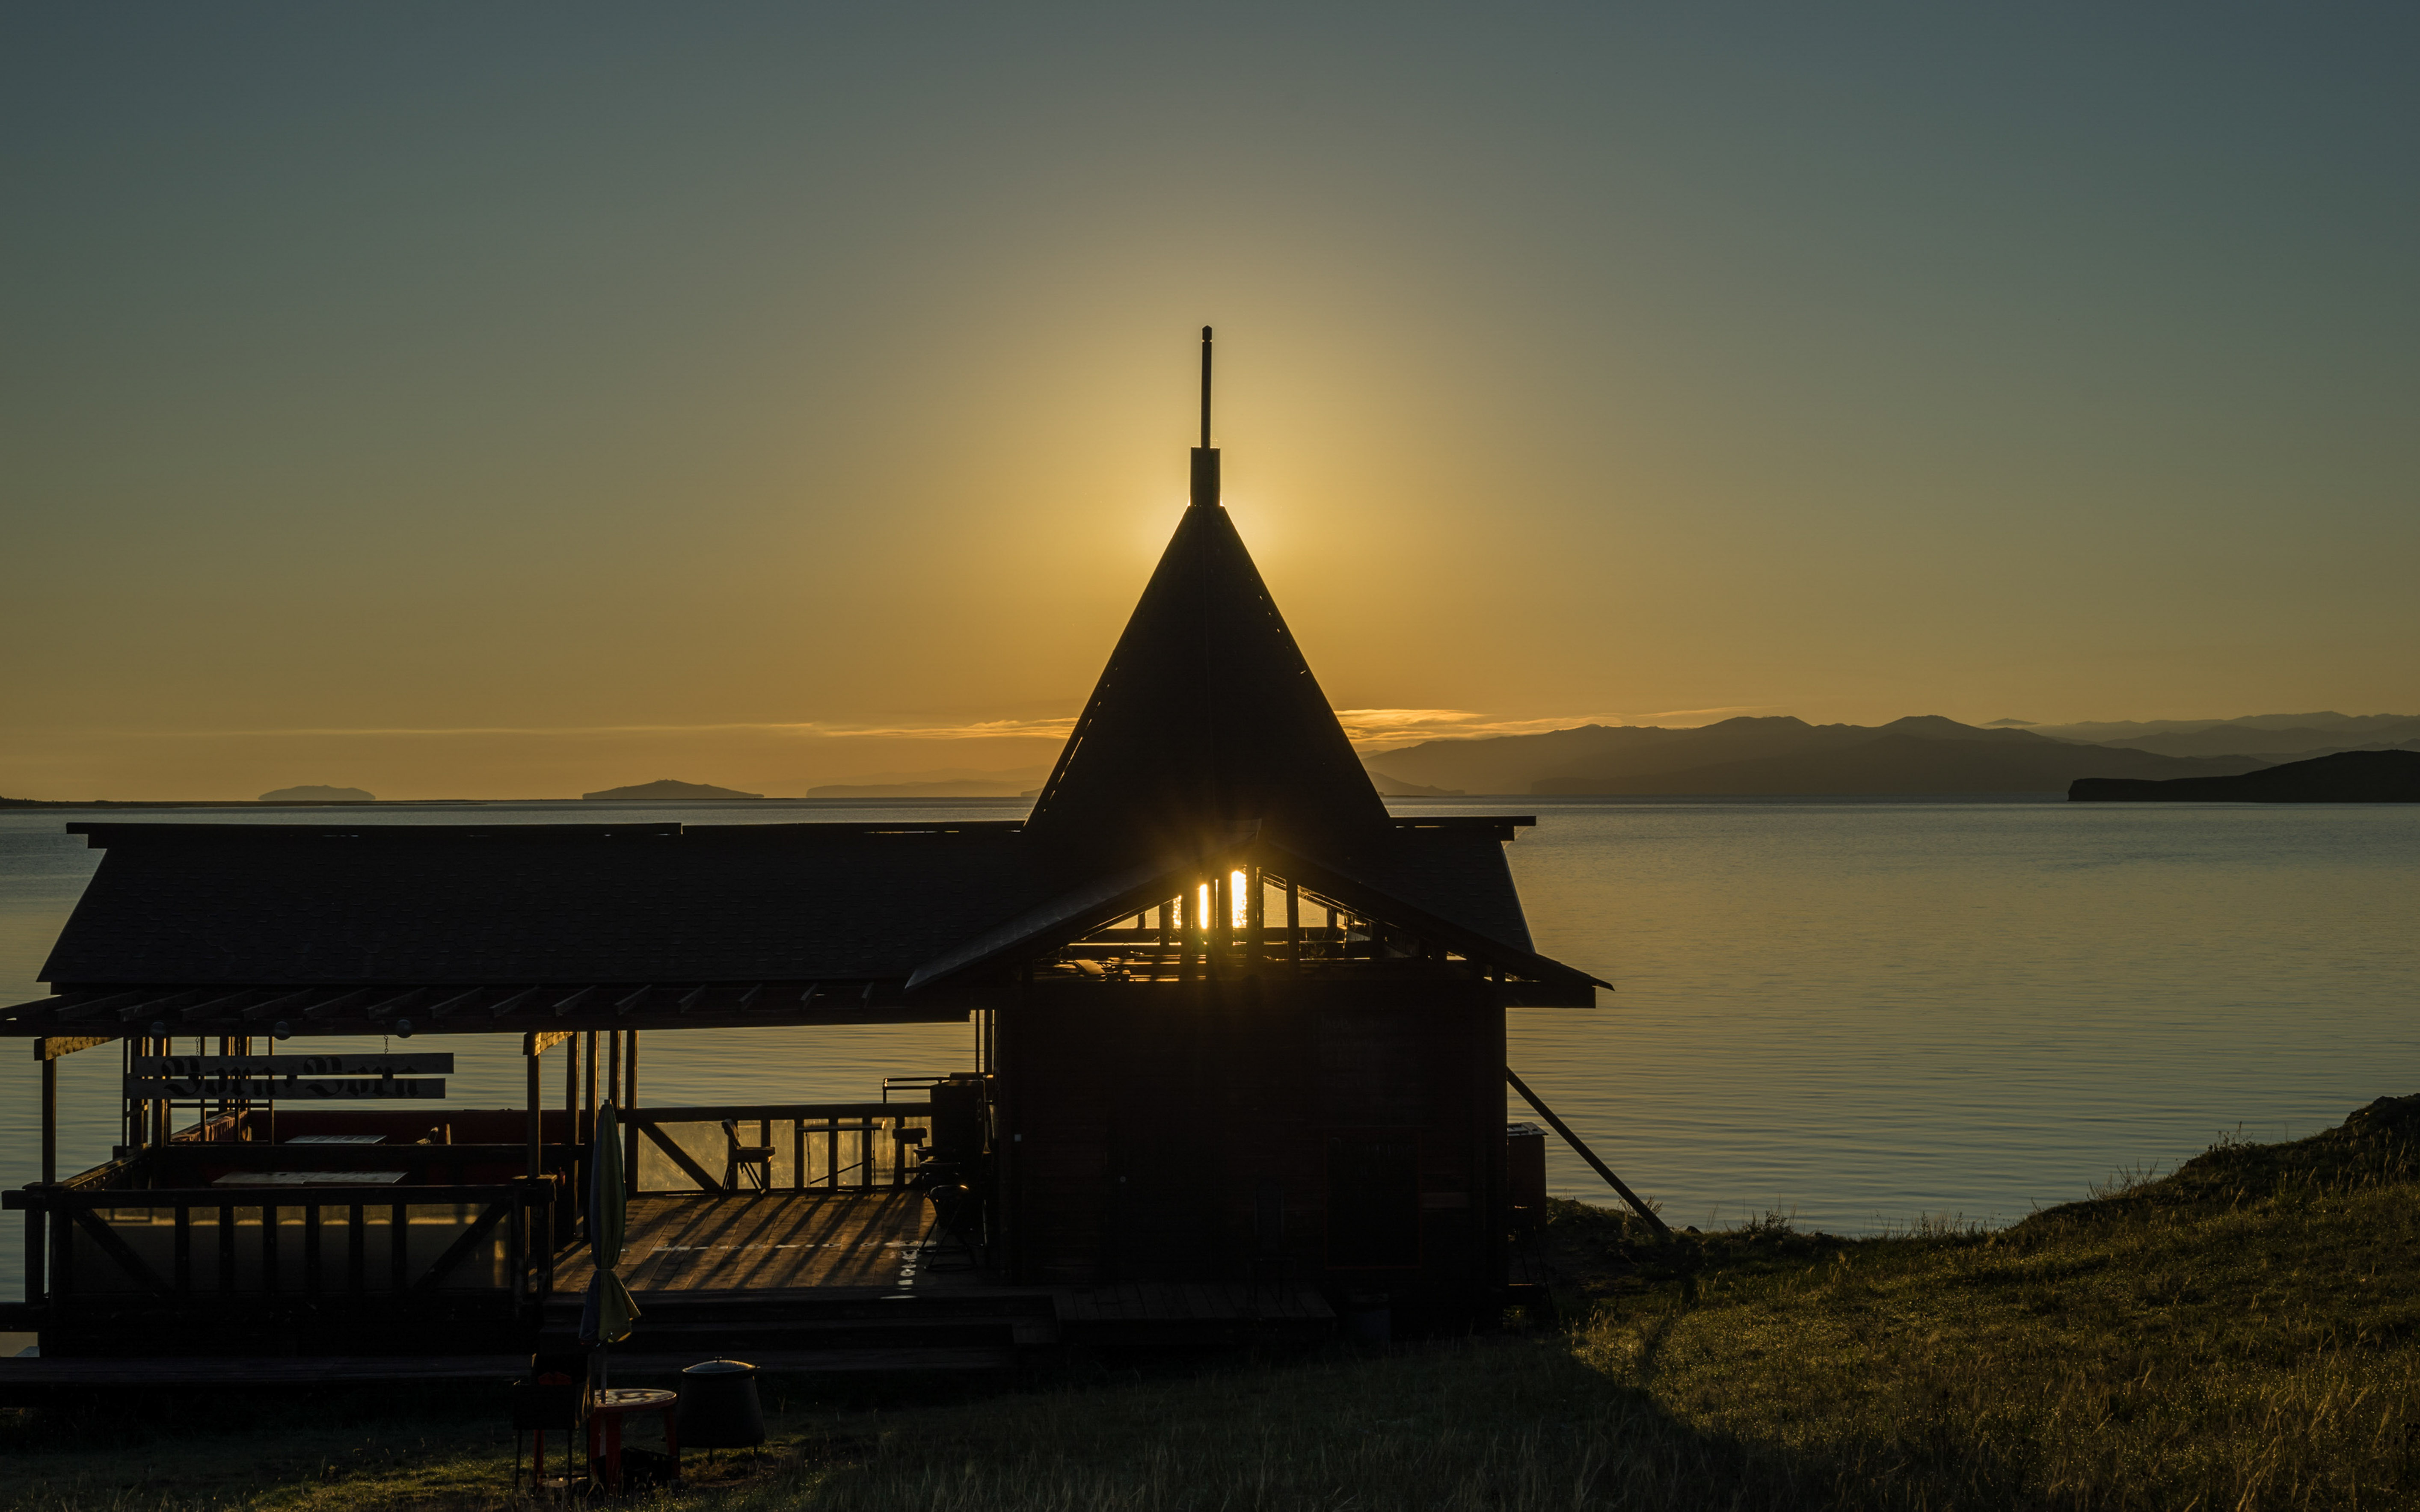 Baikal, Camp "Da-Shi" am Kleimem Meer gegenüber Olchon